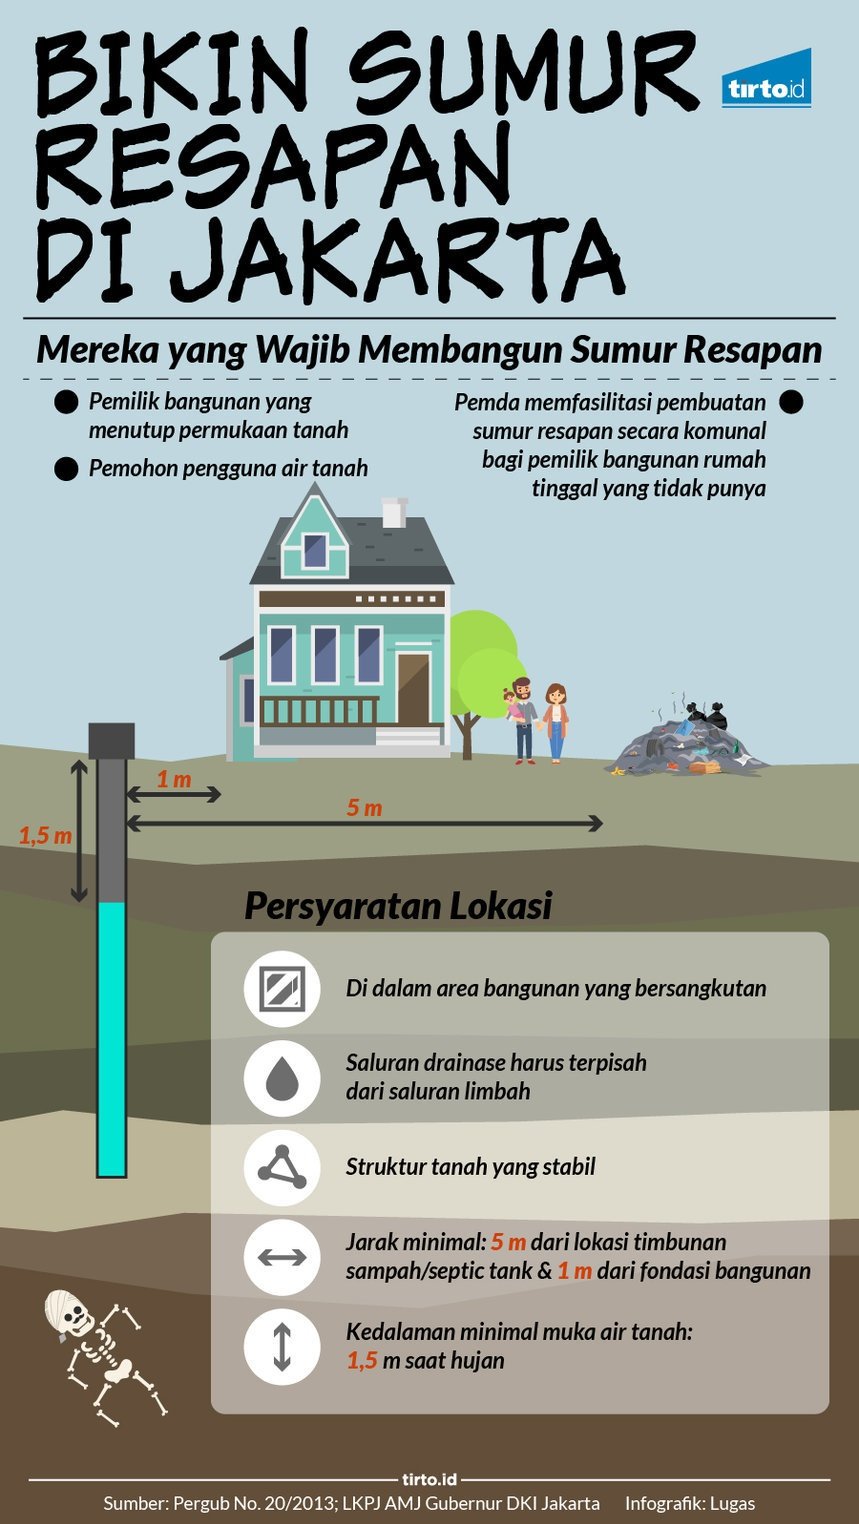 Membuat Sumur Resapan Di Jakarta Infografik Tirtoid Tirtoid